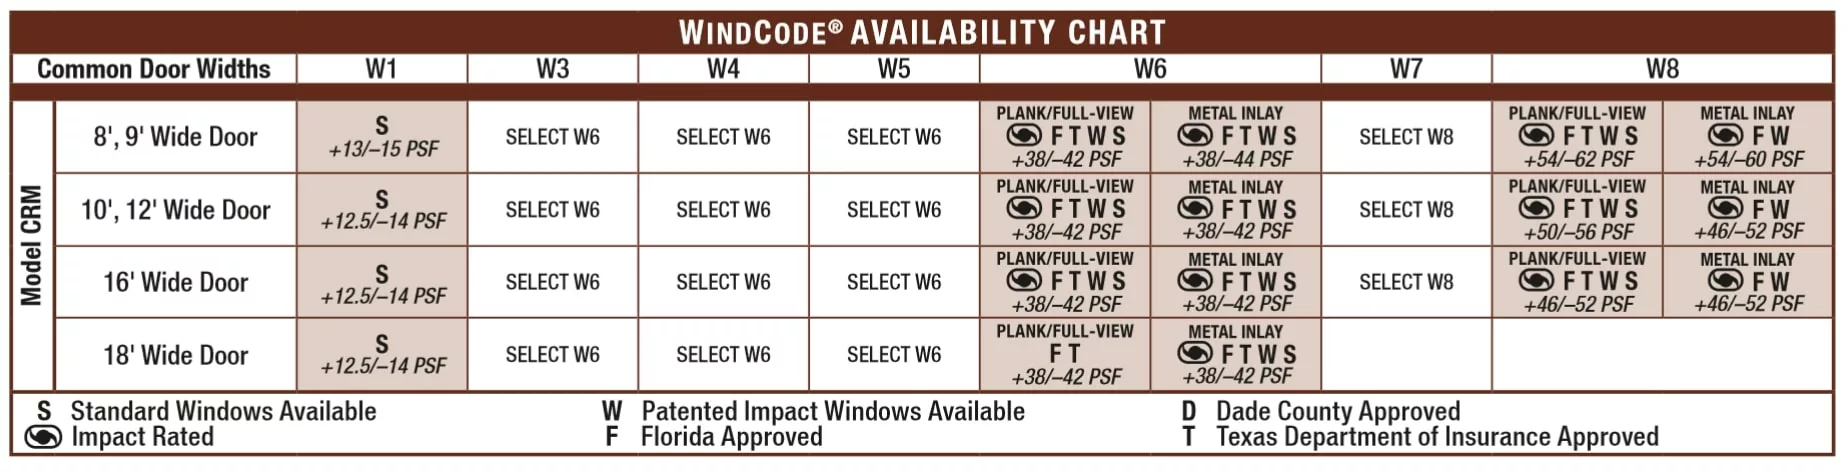 Windcode Availability Chart